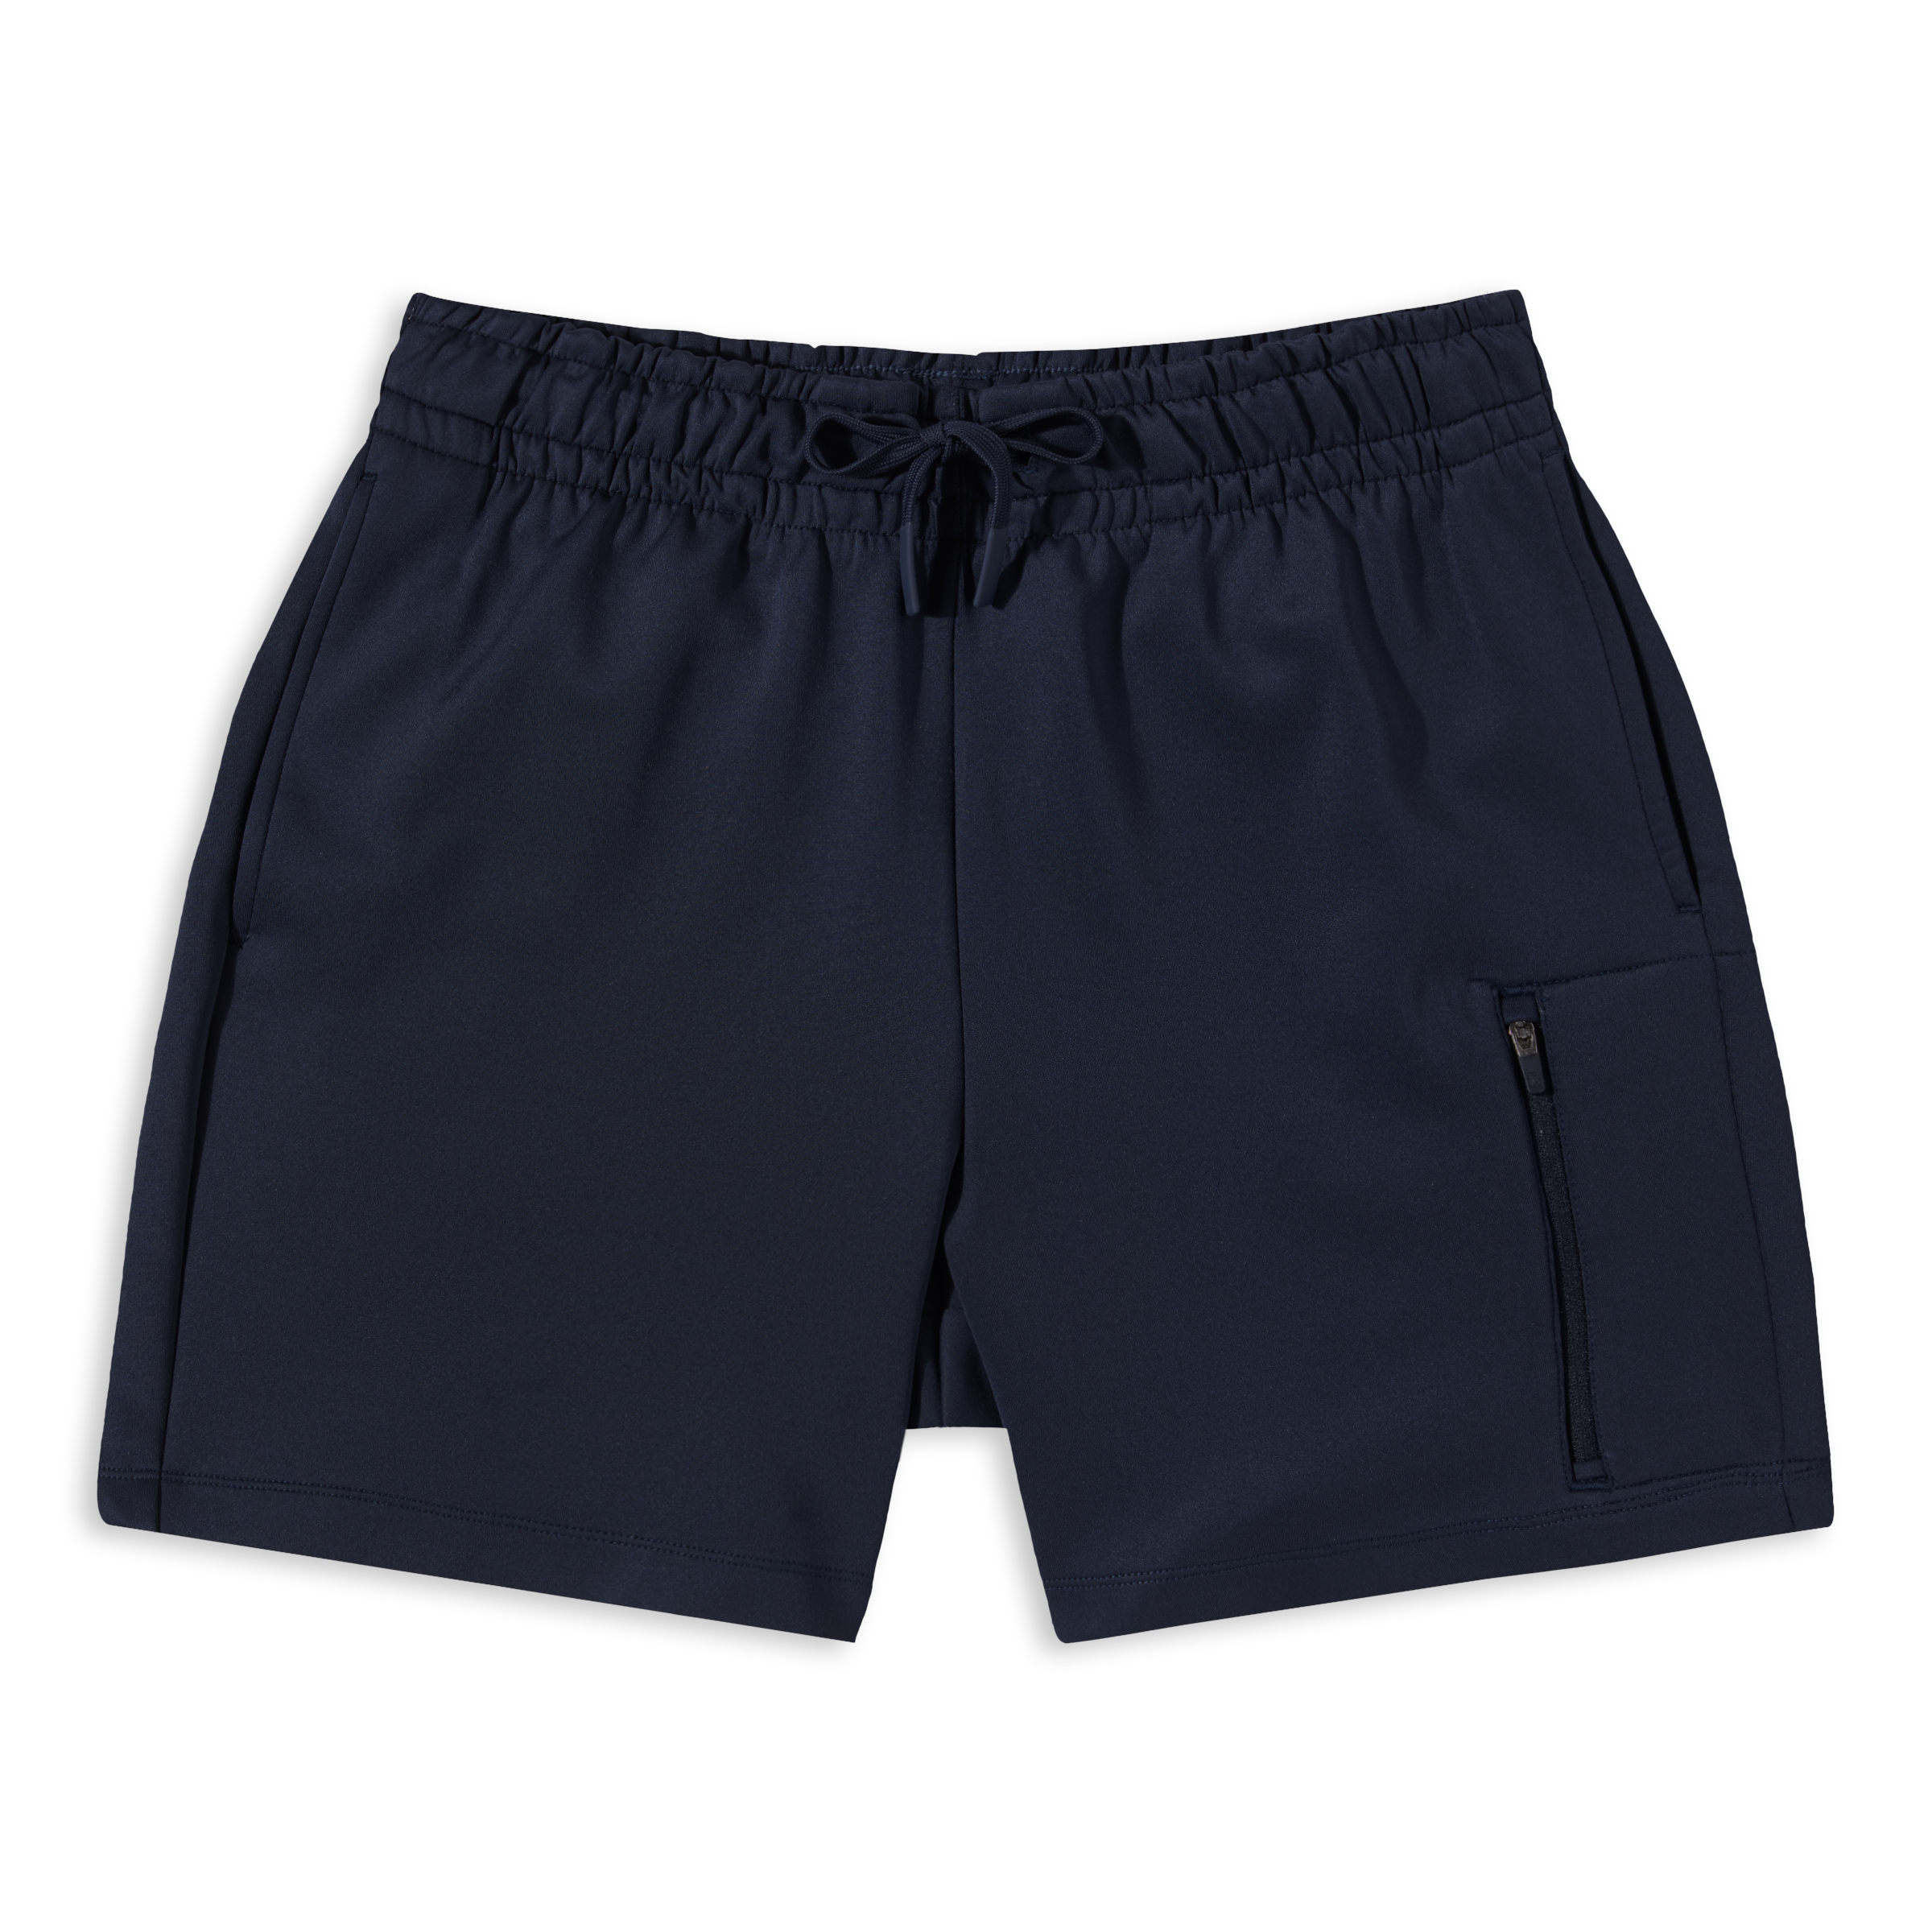 Scuba Short Navy front with thigh zipper pockets